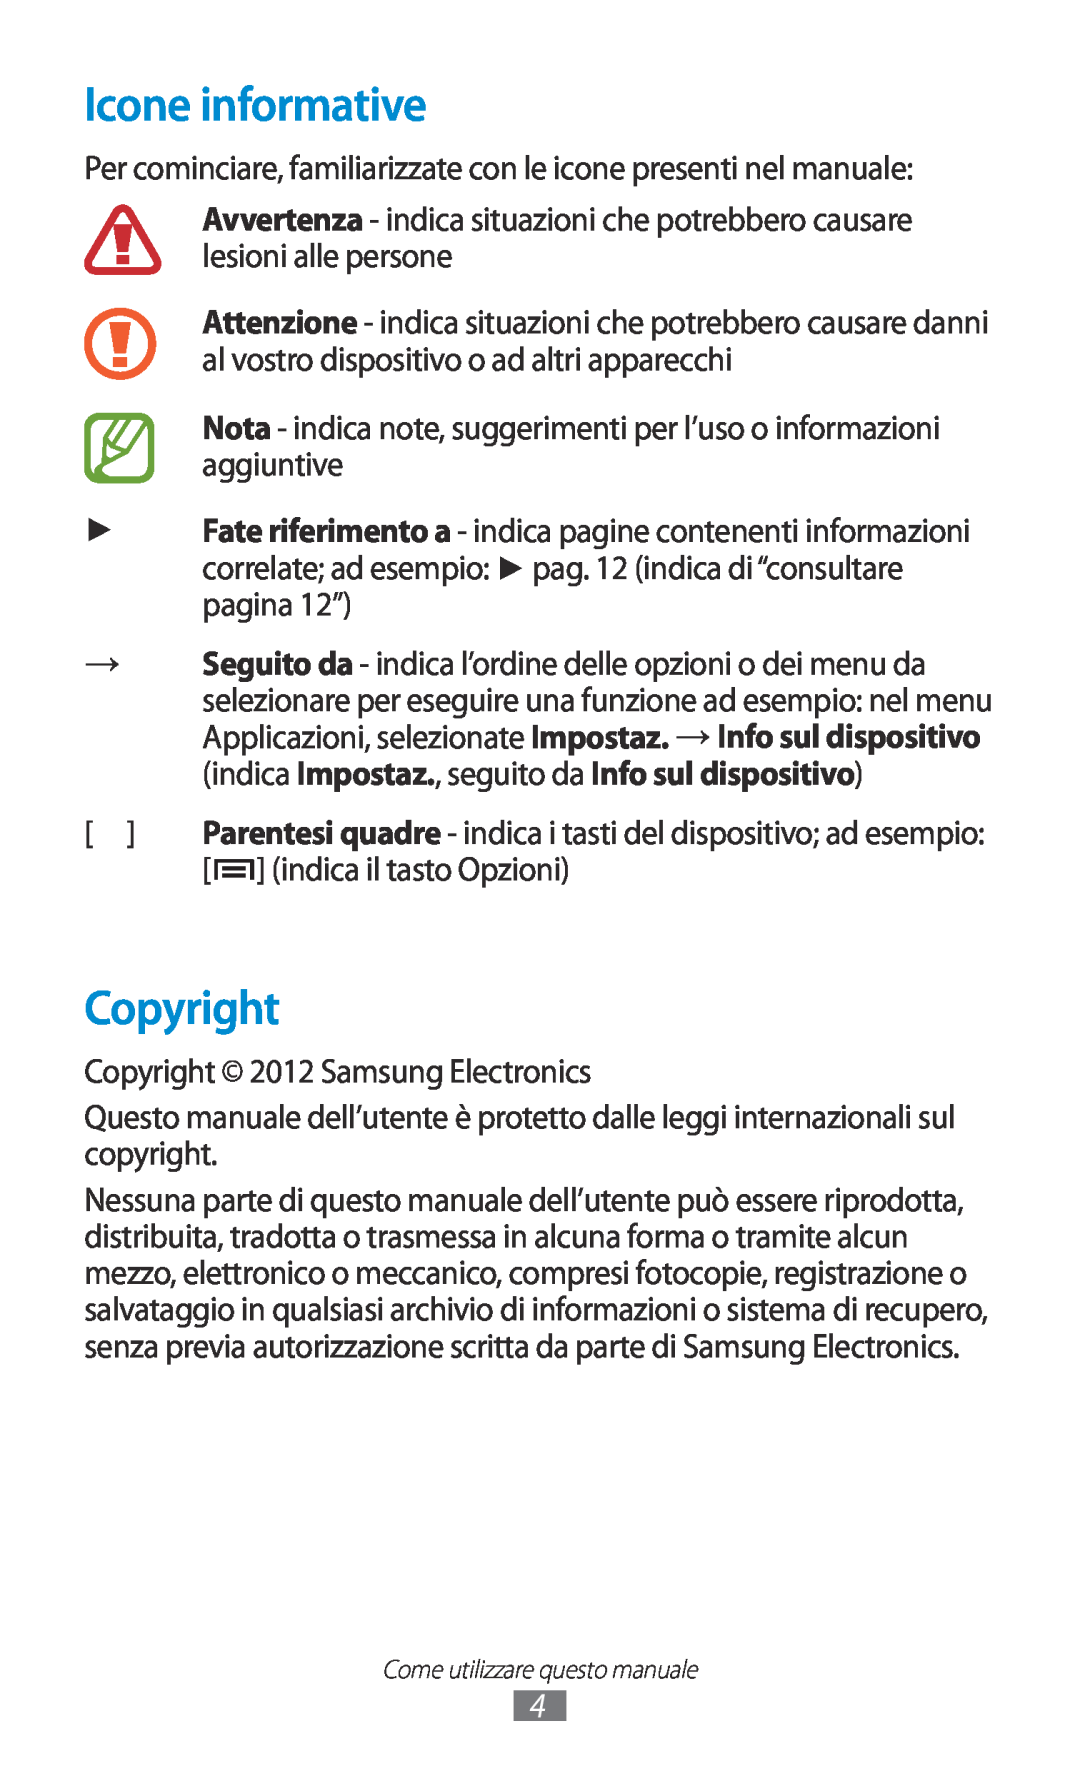 Samsung GT-N7000RWEITV, GT-N7000ZBAXEO, GT-N7000ZBEHUI, GT-N7000ZBAFWB, GT-N7000RWATIM manual Icone informative, Copyright 